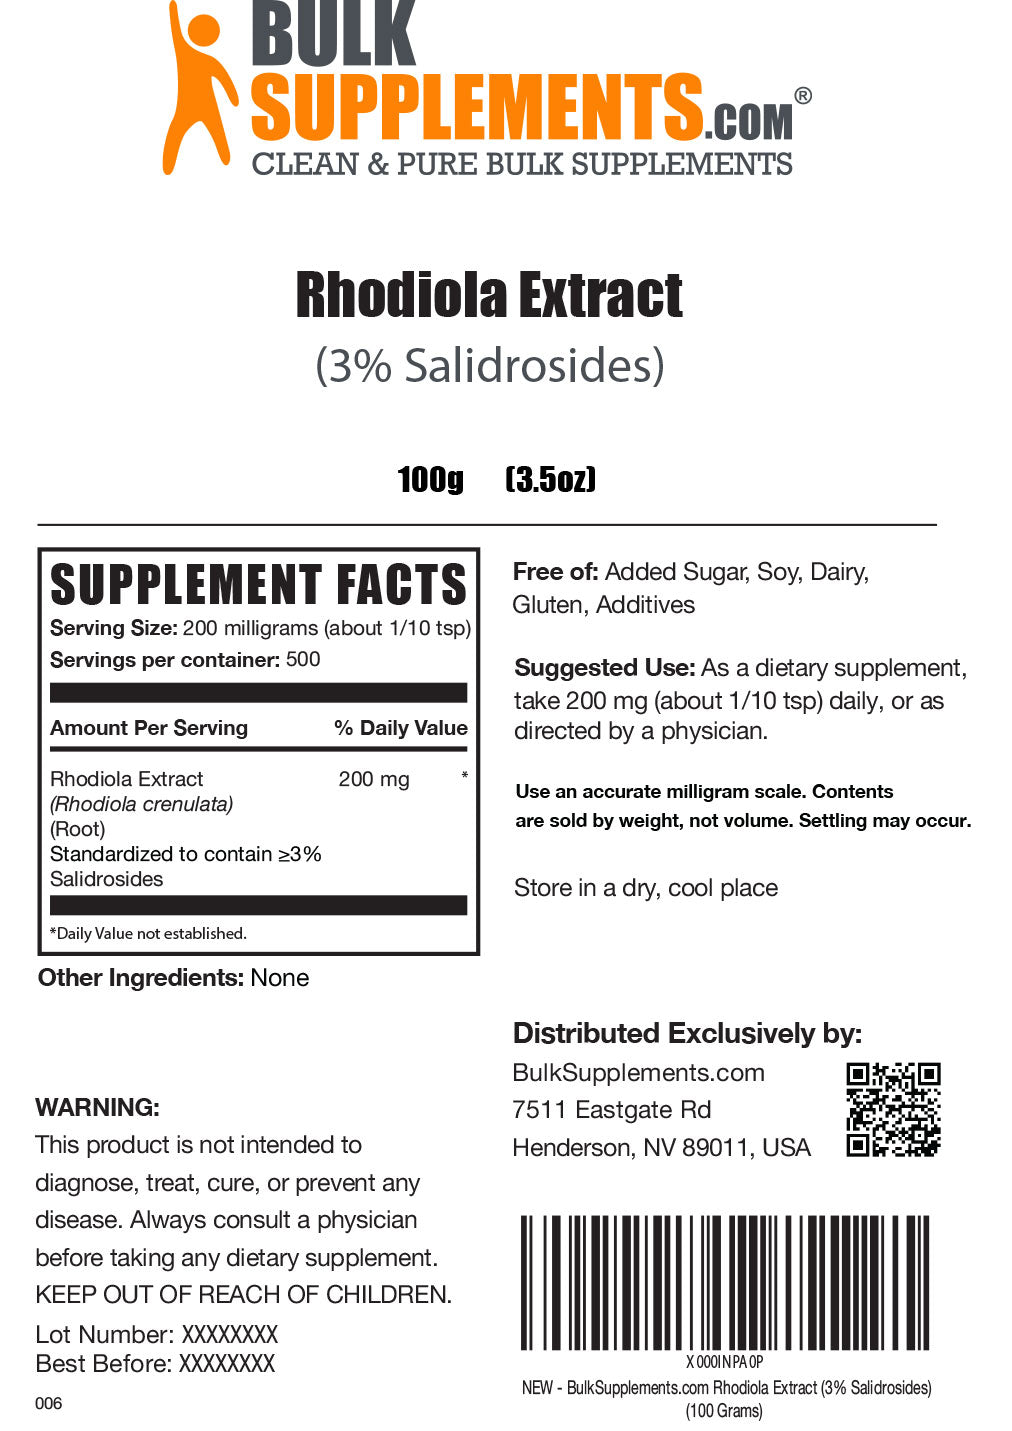 Rhodiola Extract (3% Salidroside) Powder 250g Label